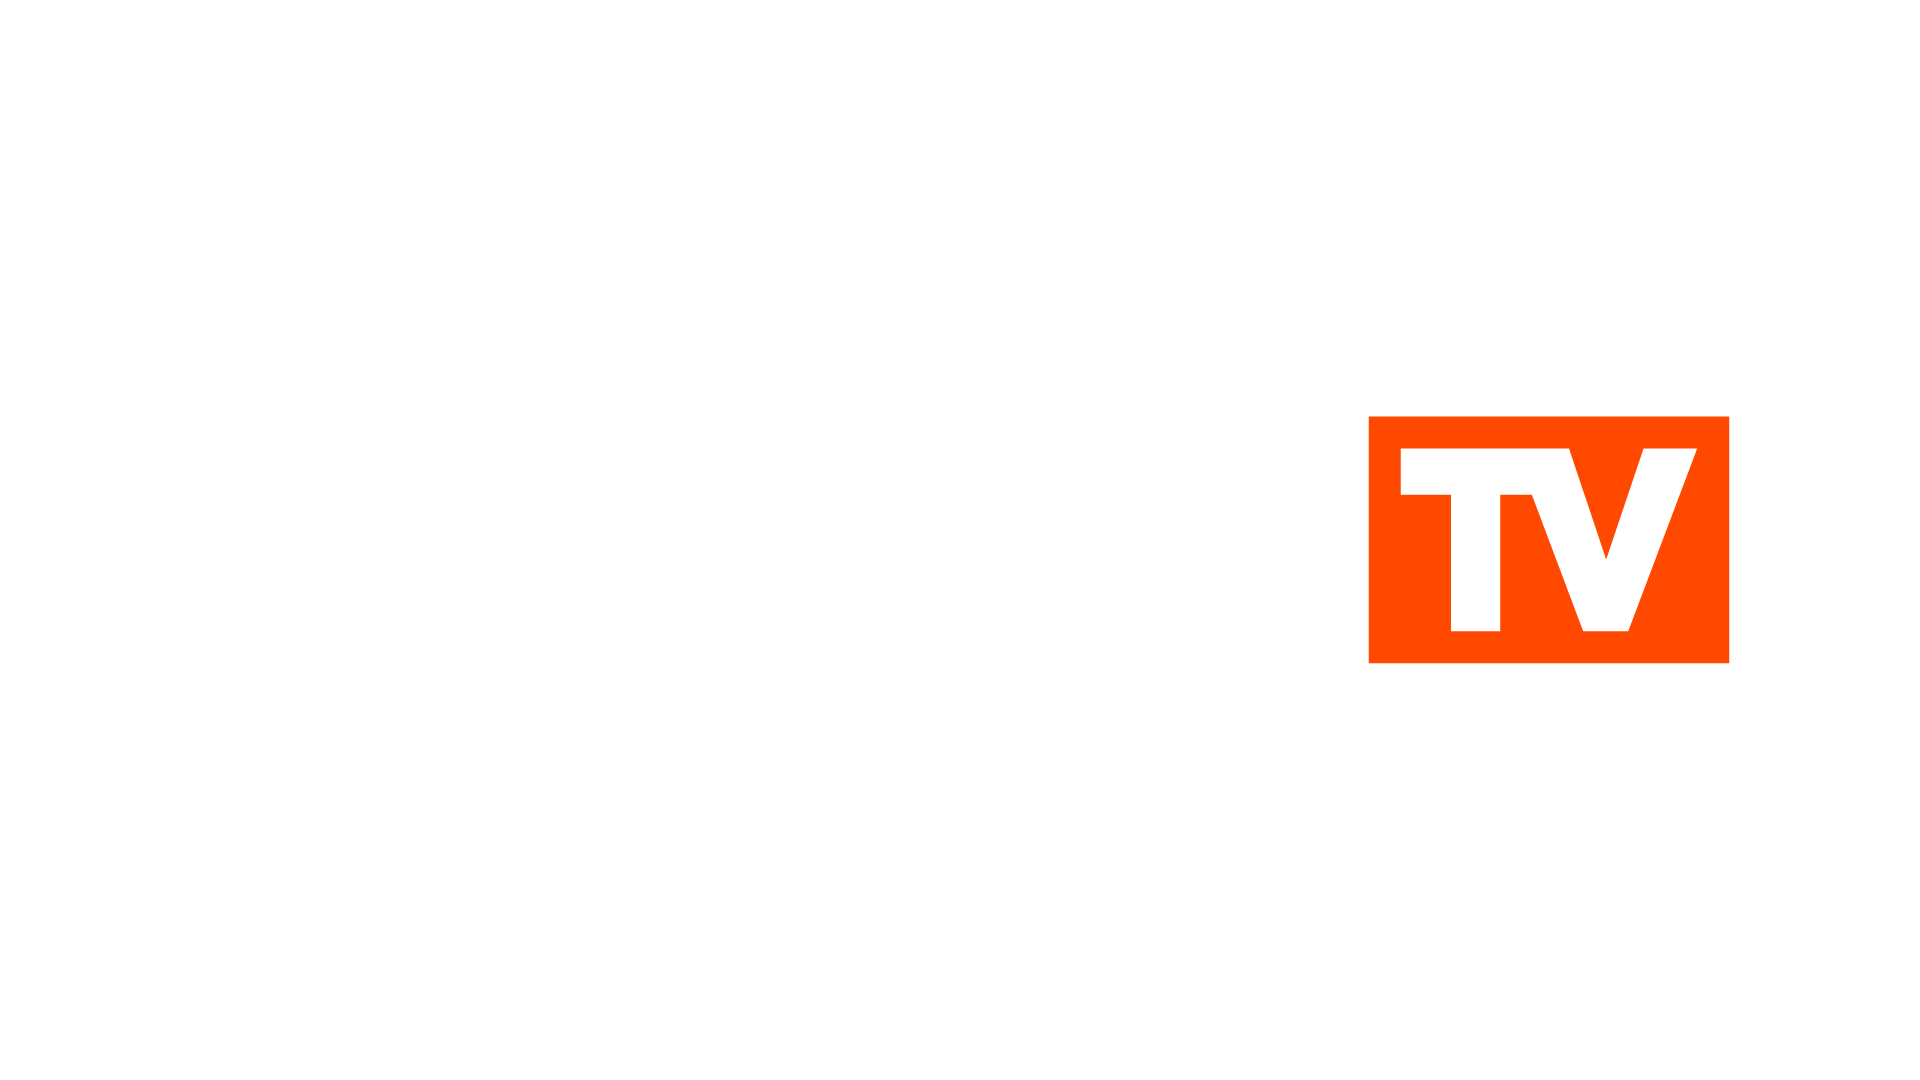 Телеканал Bridge TV. Логотип телеканала бридж ТВ. Телеканал Bridge логотип. Телеканал Dange TV. Ссылки на тв каналы